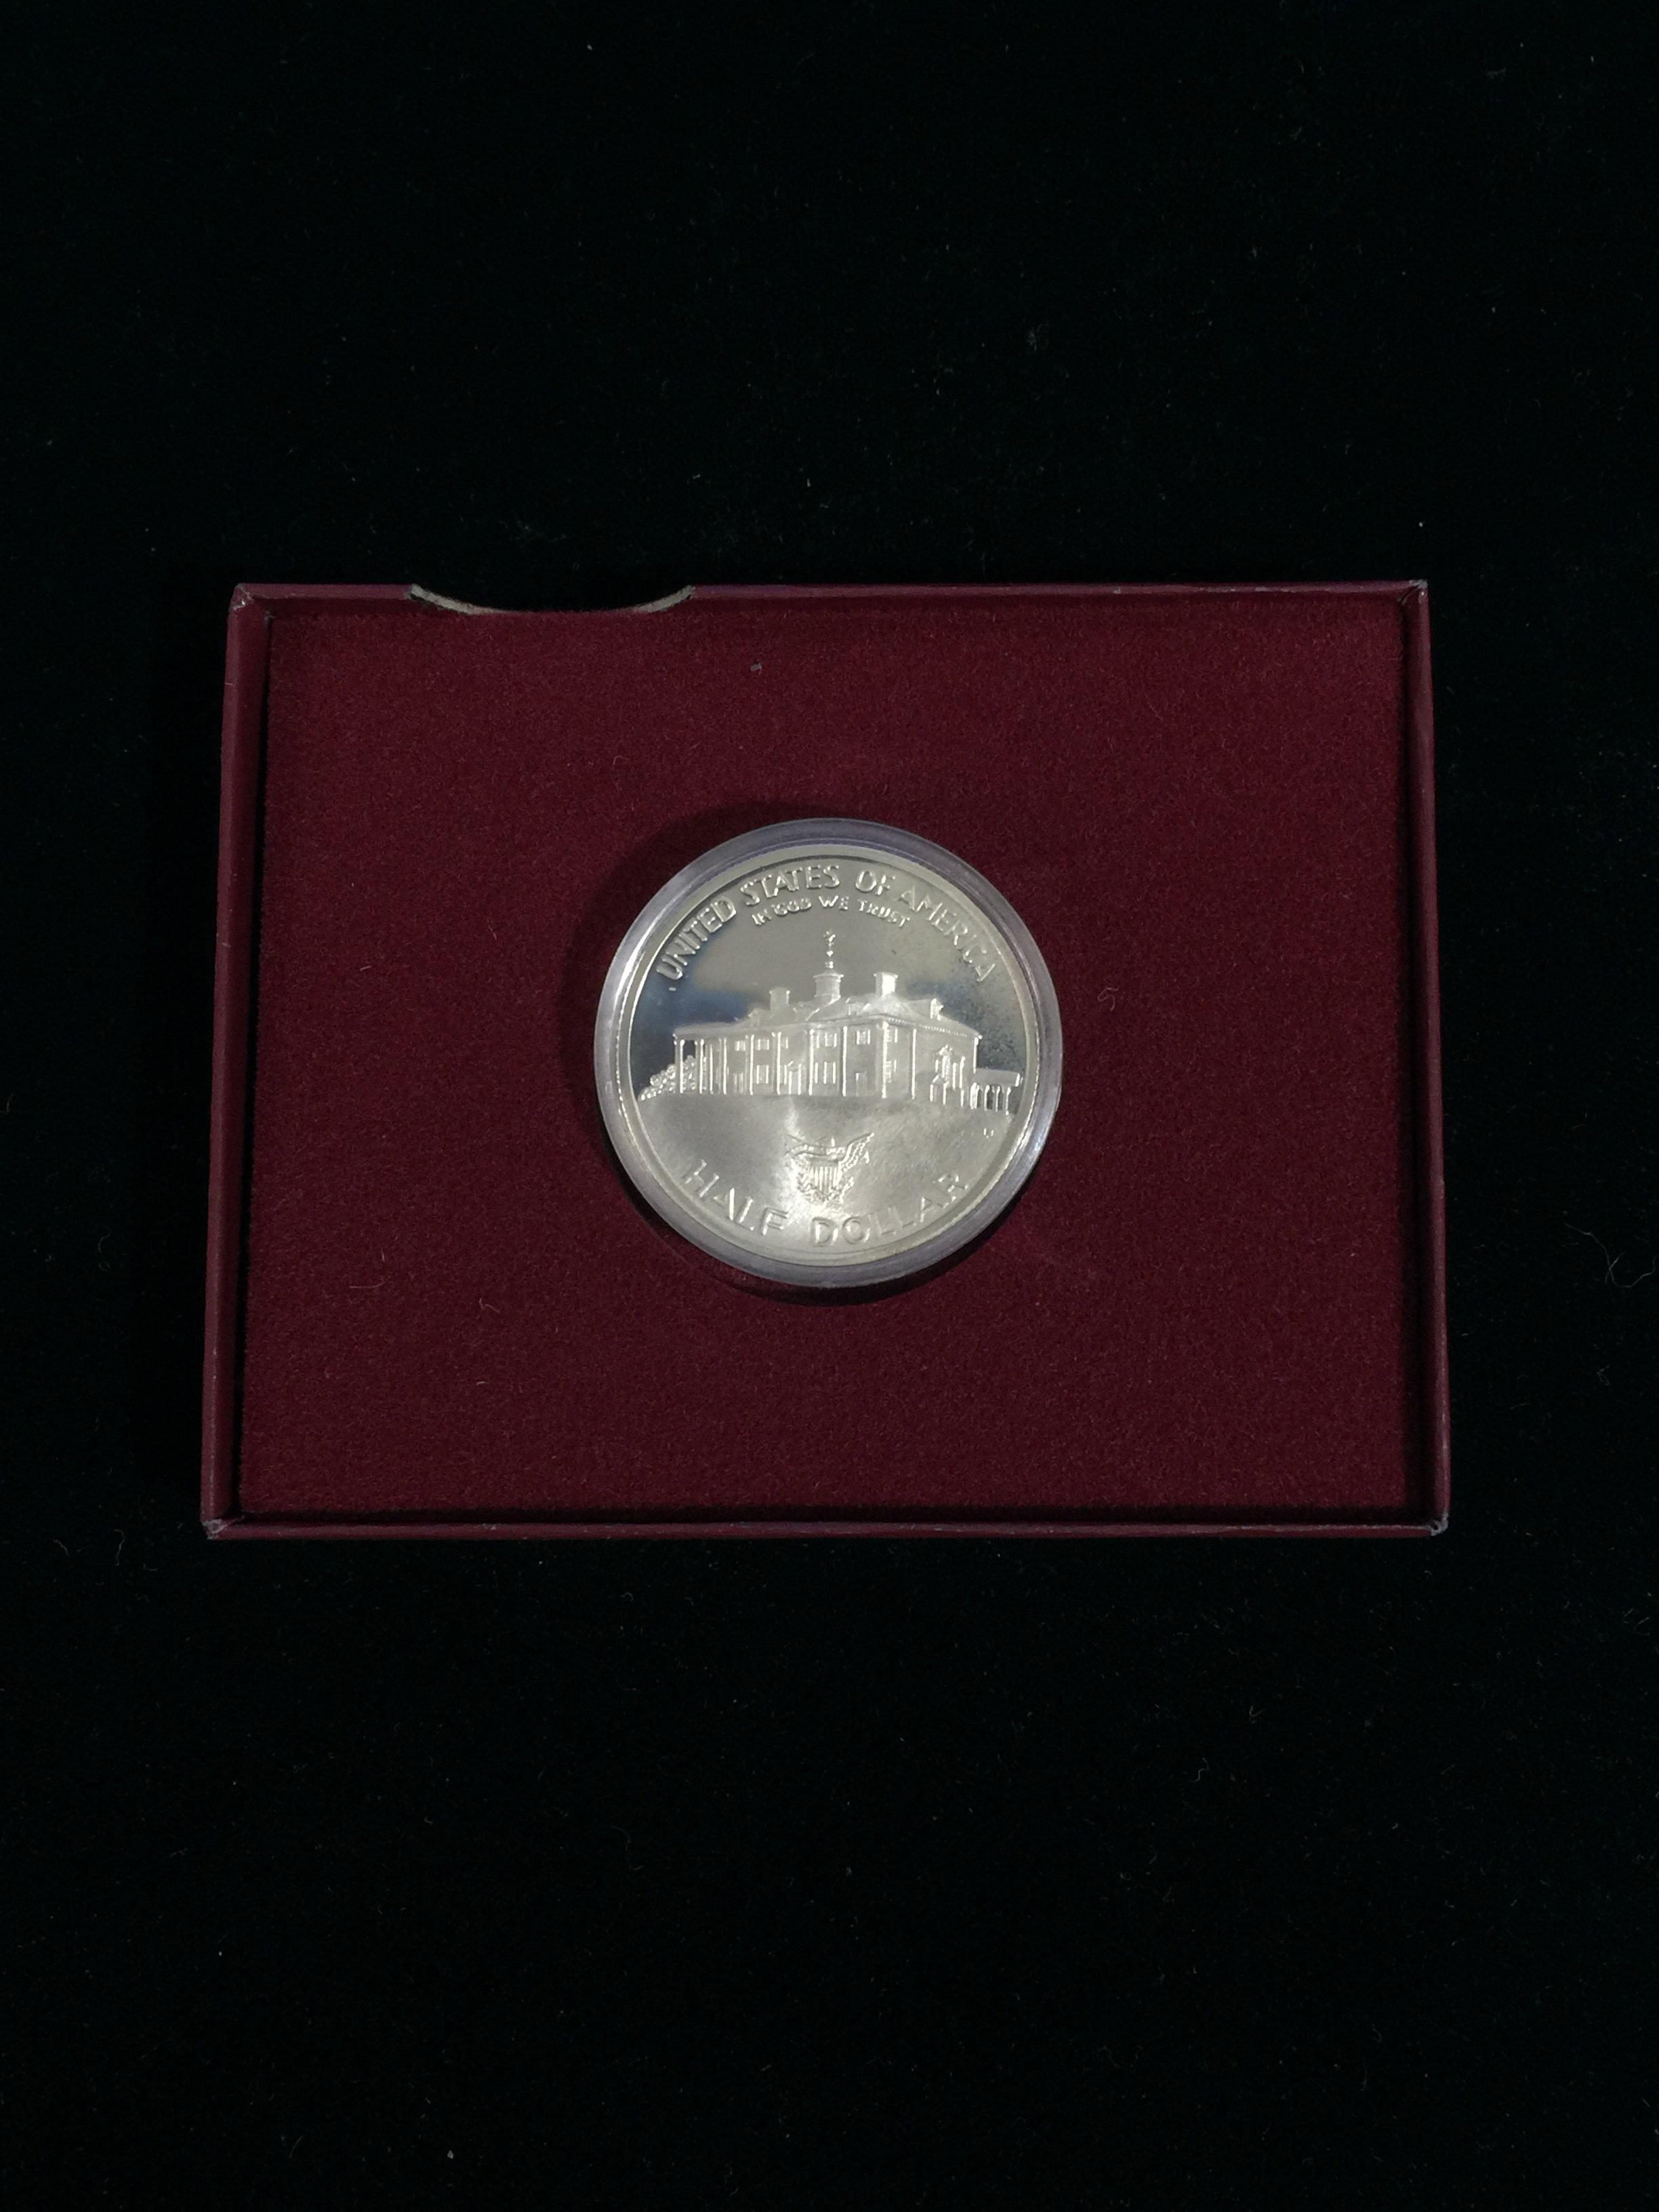 1982 Proof George Washington Commemorative US Half Dollar - 90% Silver Coin